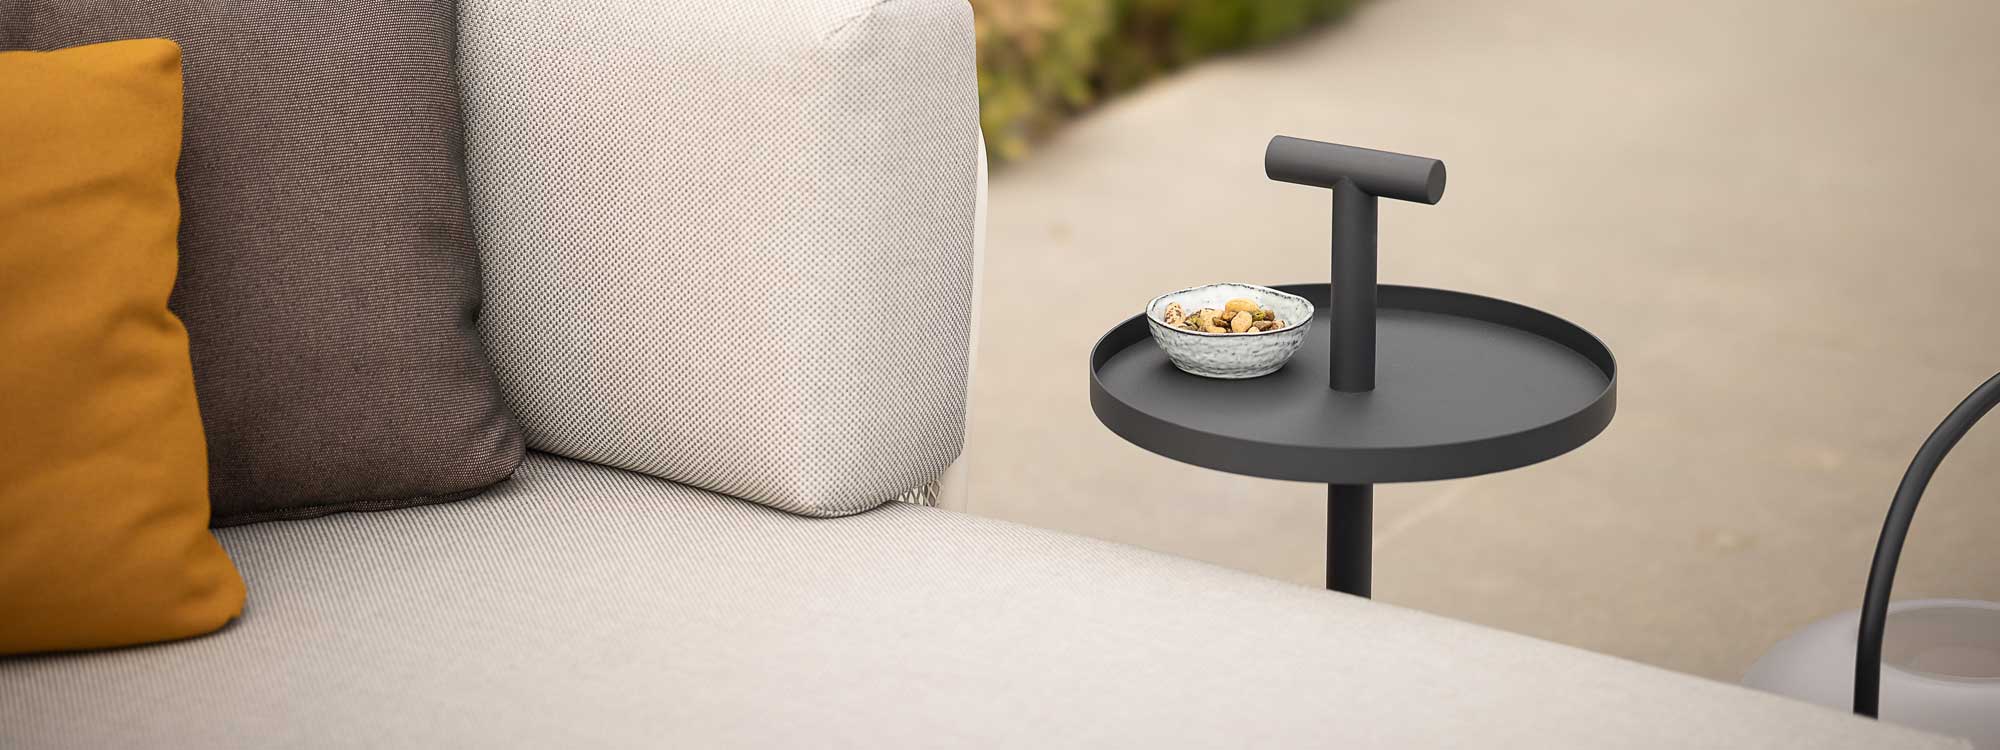 Image of Albus minimalist outdoor side table next to Baza modern garden sofa